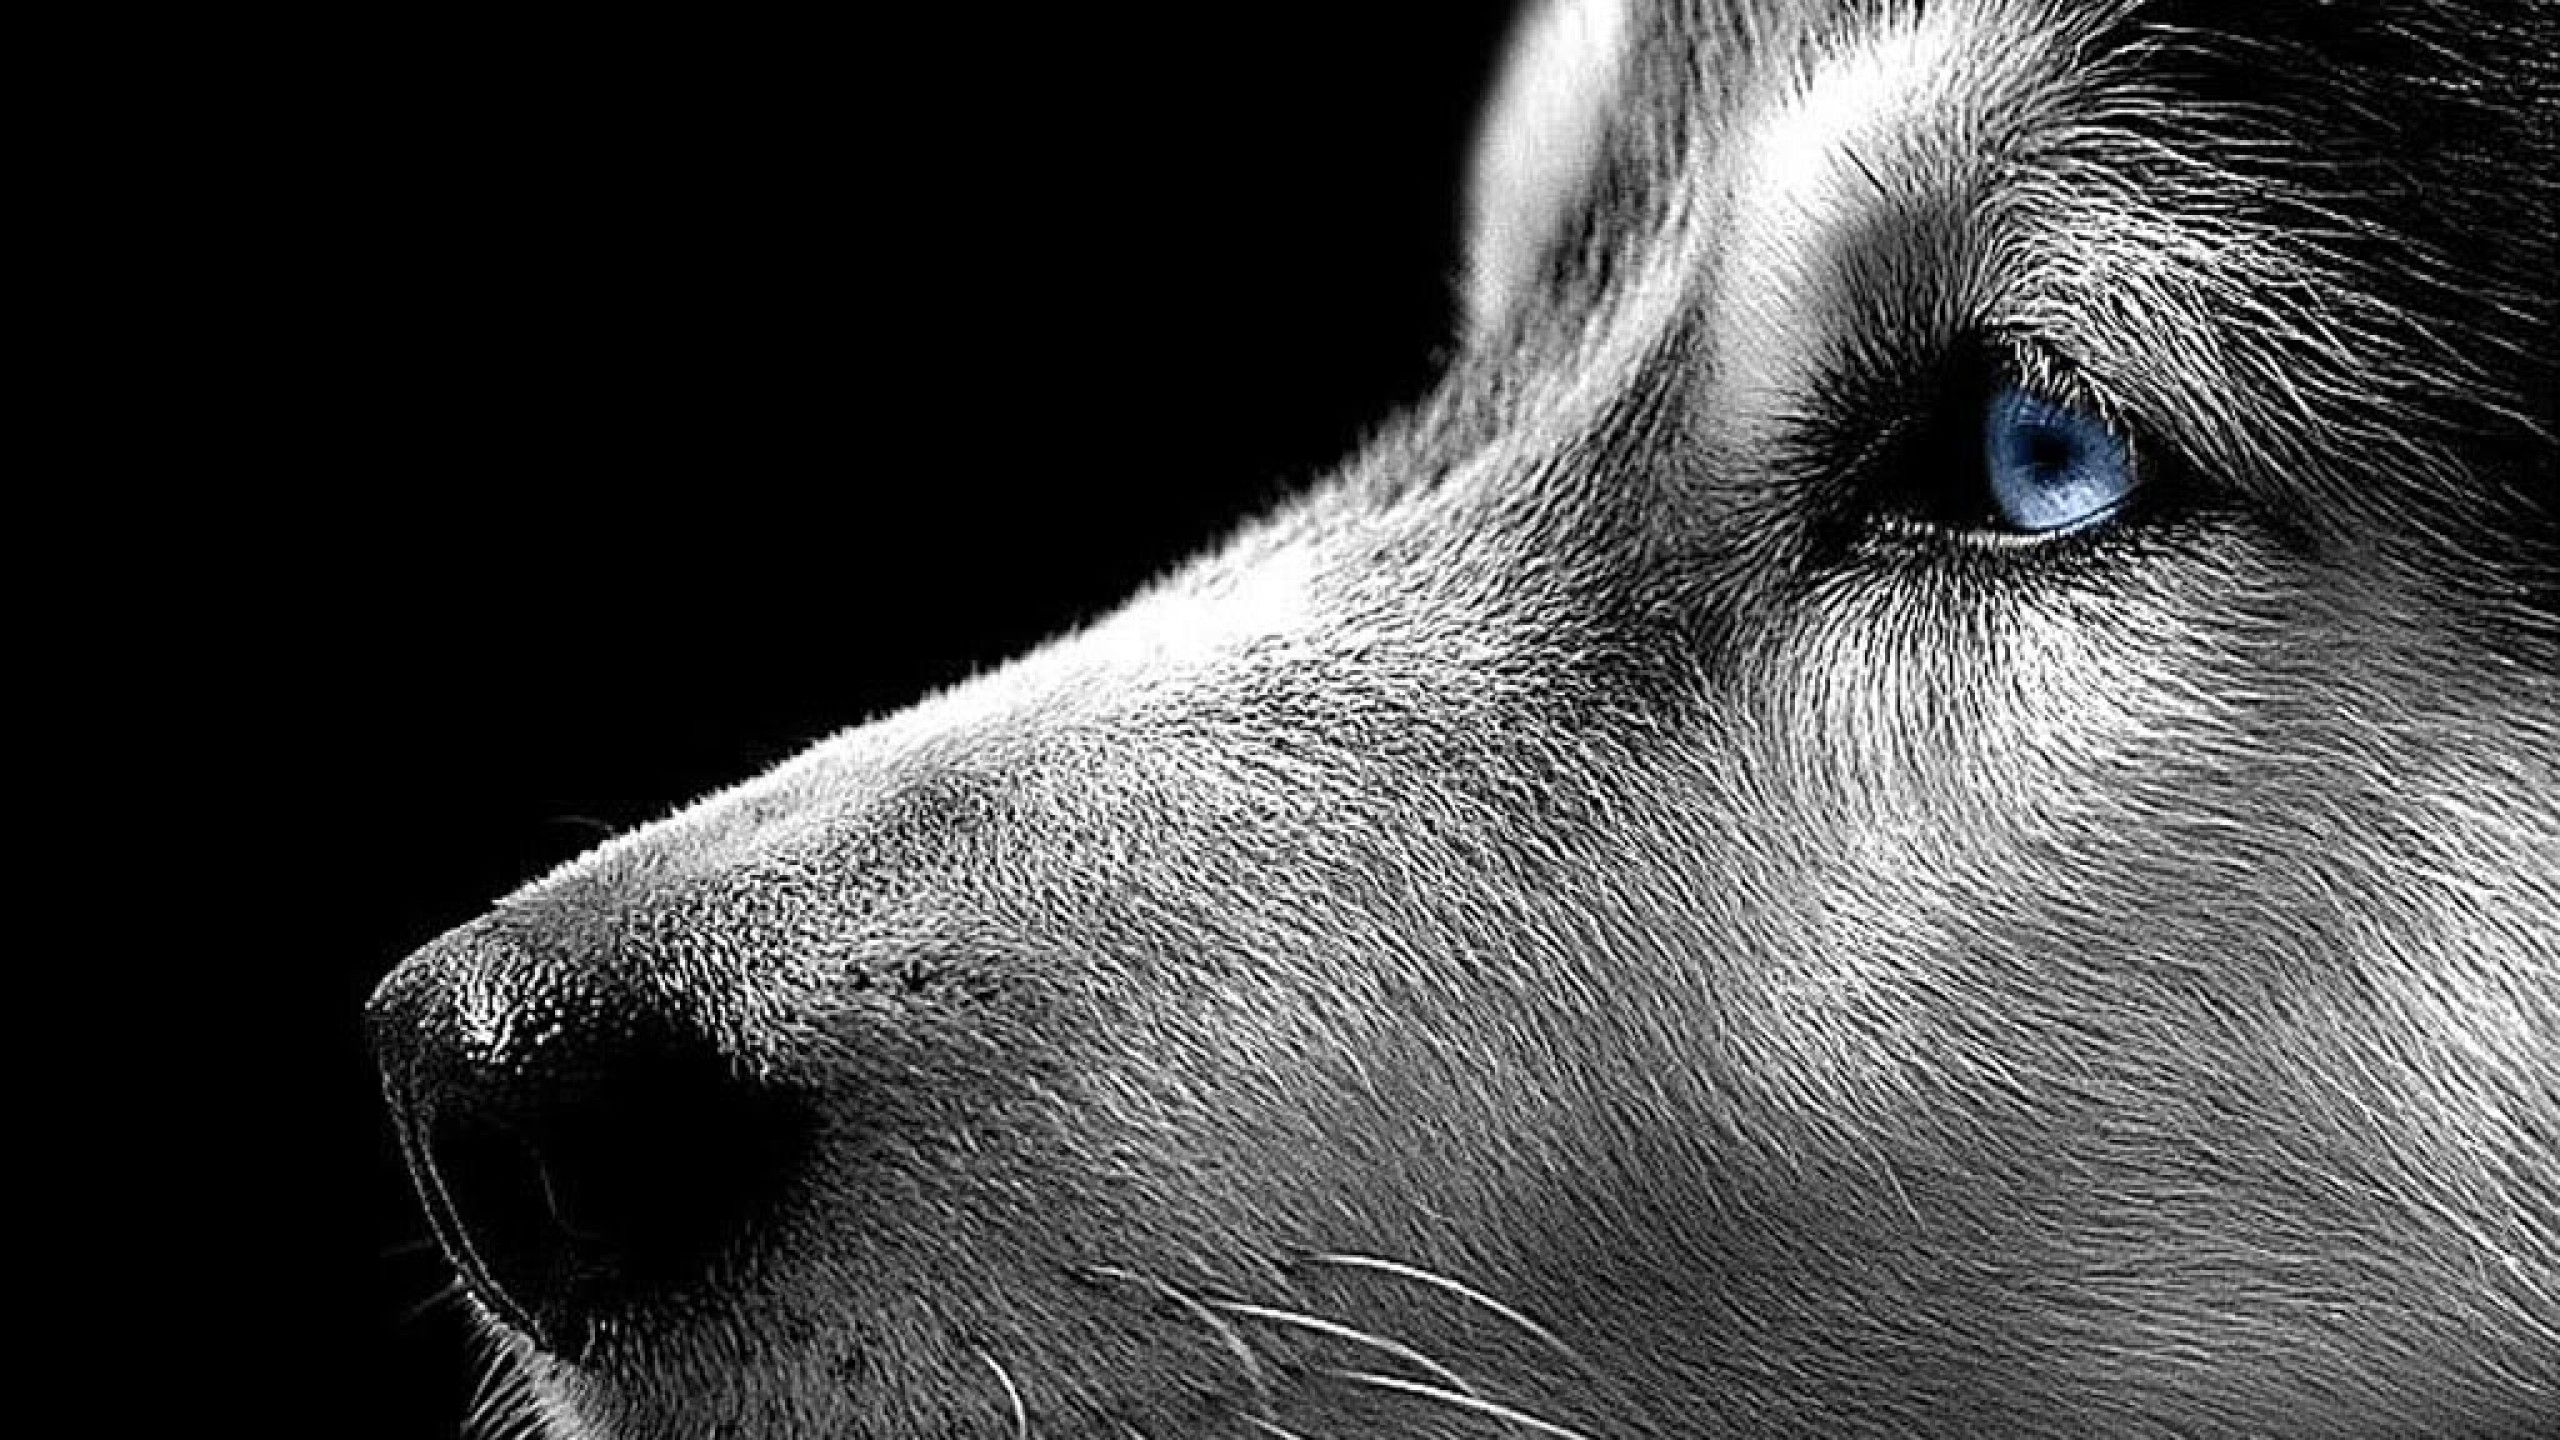 Desktop images of pit bull dogs wallpaper